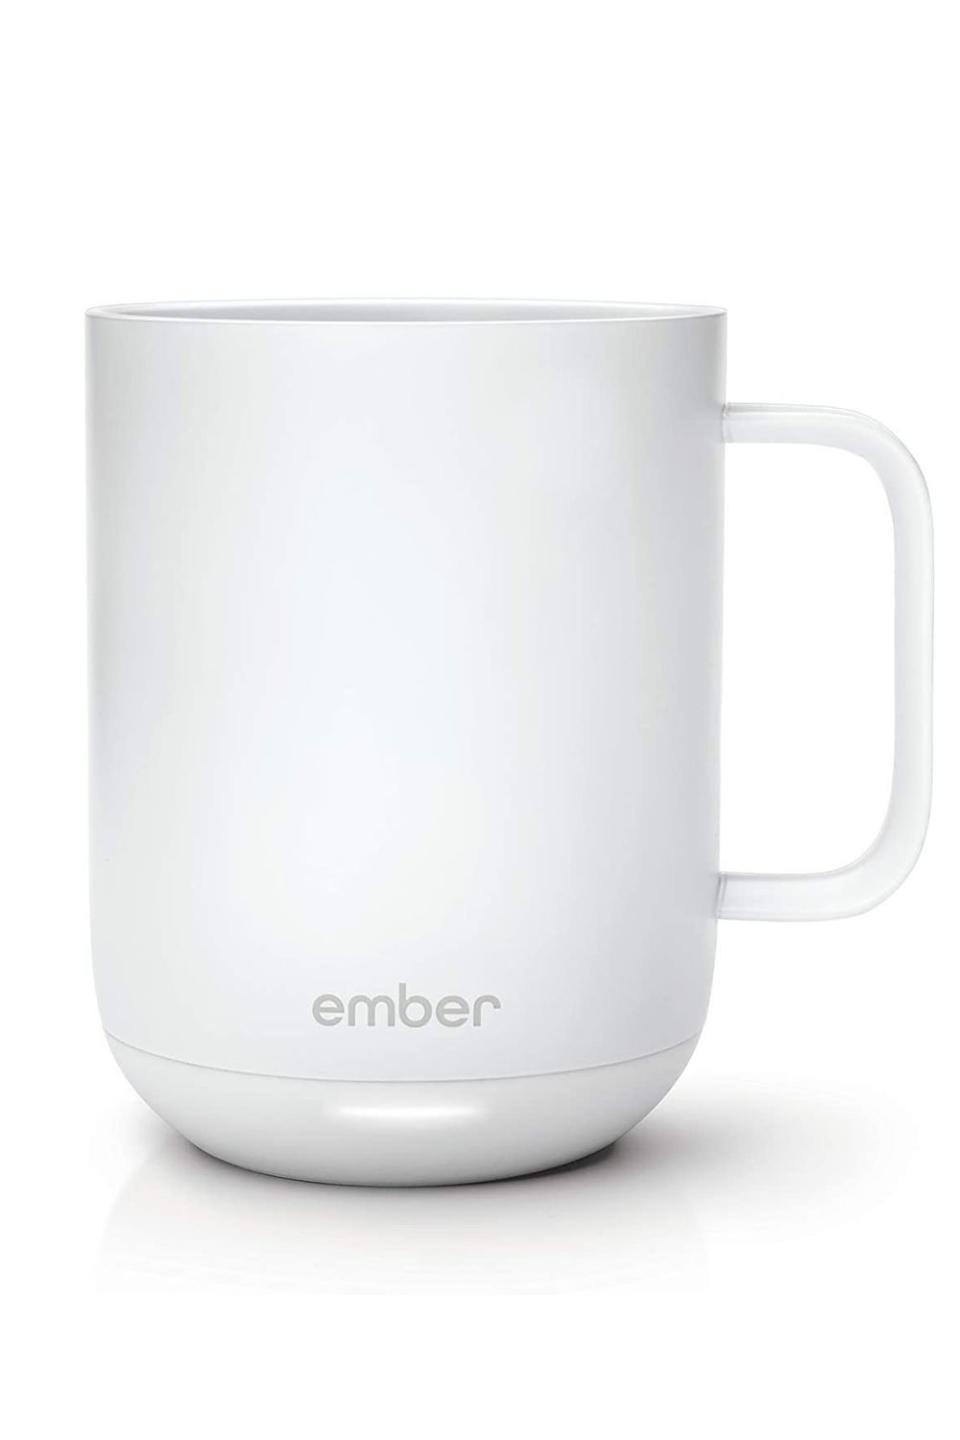 24) Ember Temperature Control Ceramic Mug